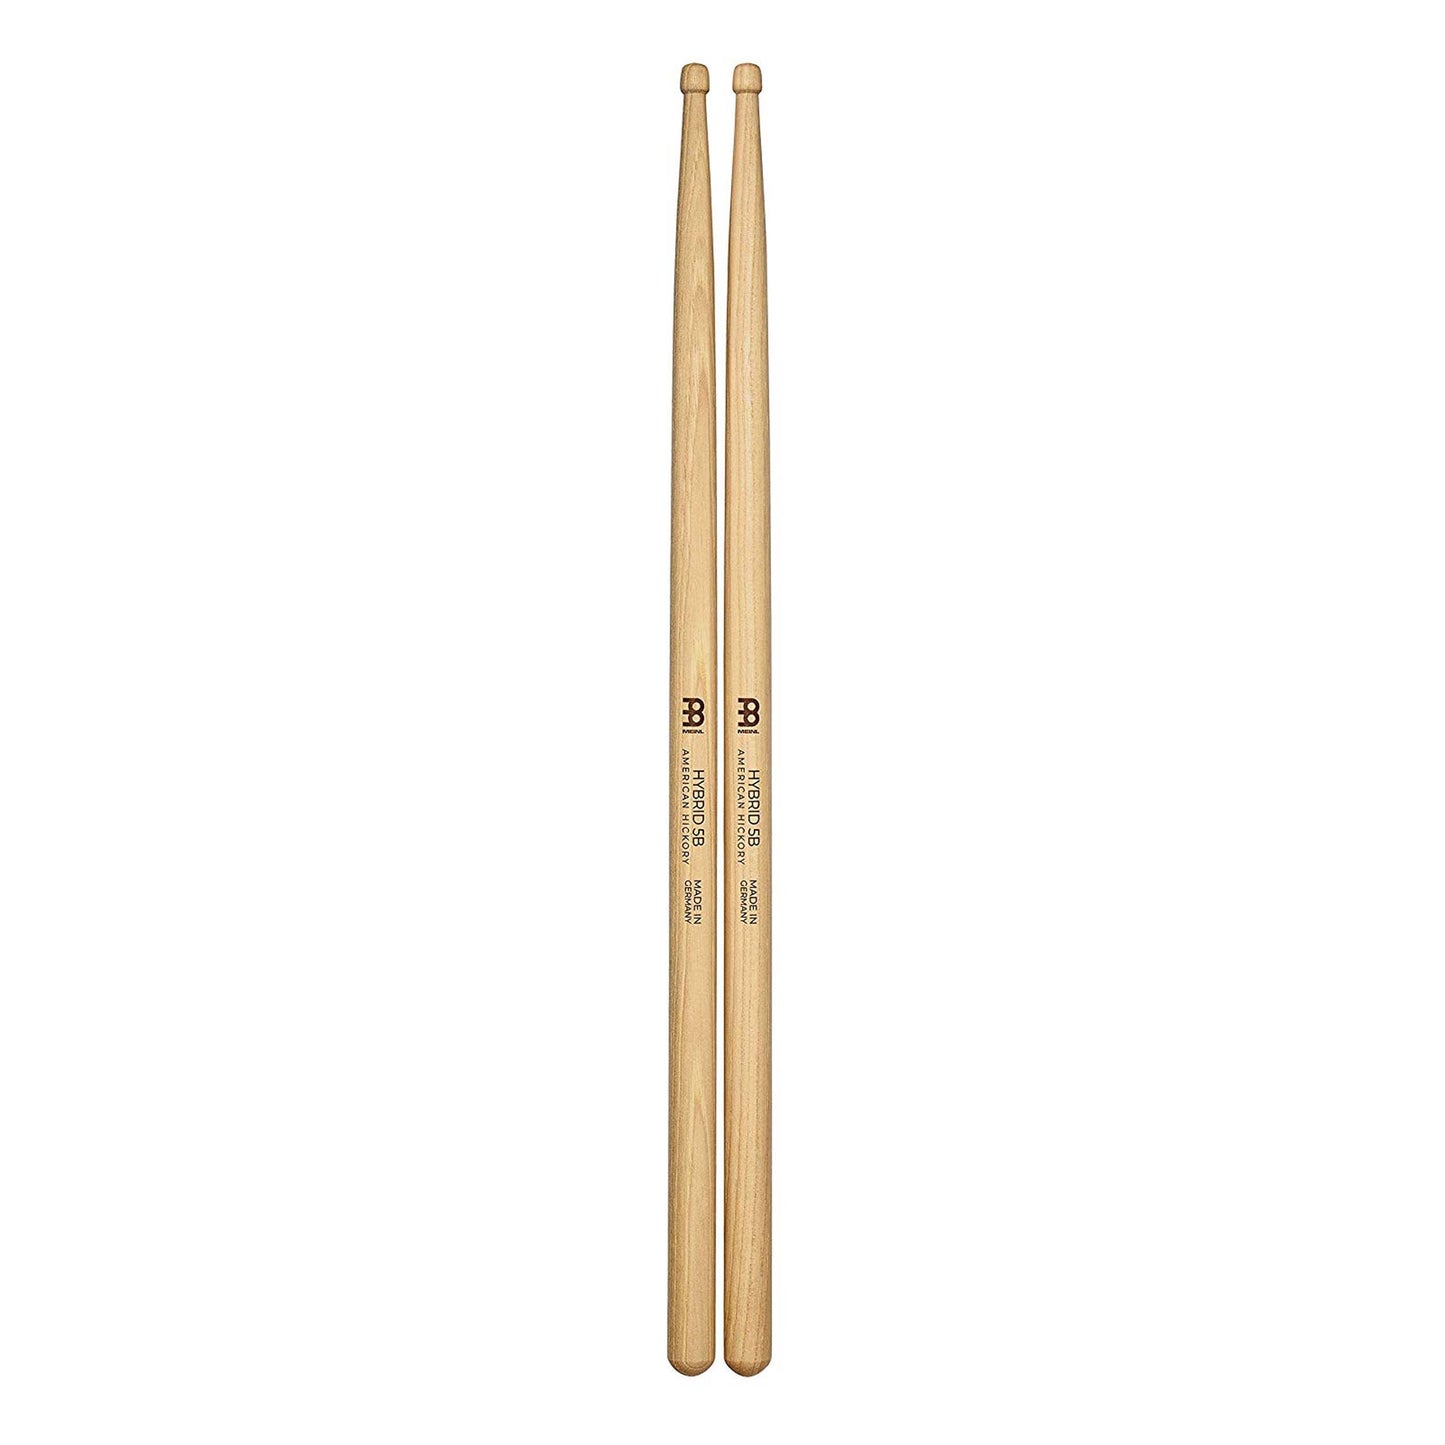 Meinl Stick & Brush Hybrid Hickory Drum Sticks 5B